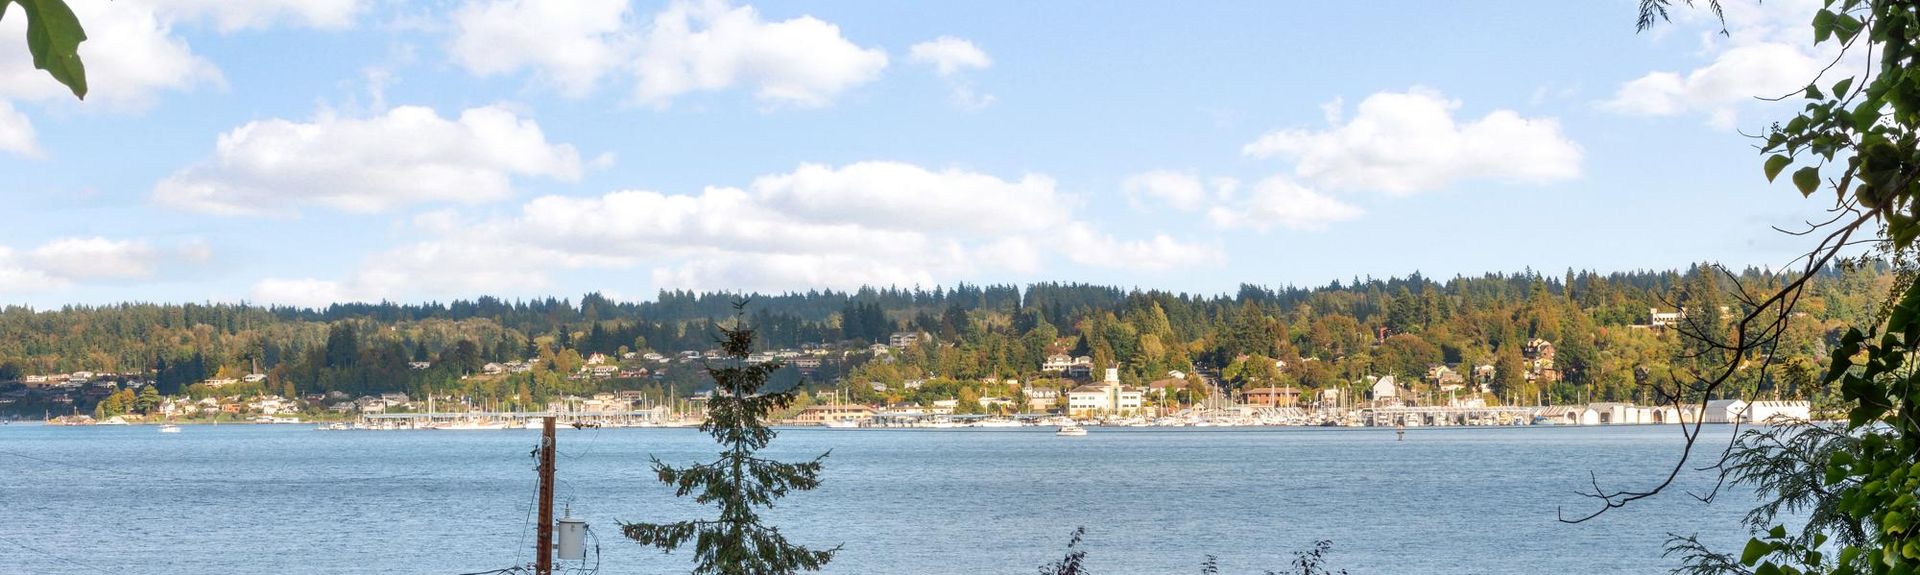 Golden Gardens Park Seattle Vacation Rentals For 2019 Homeaway